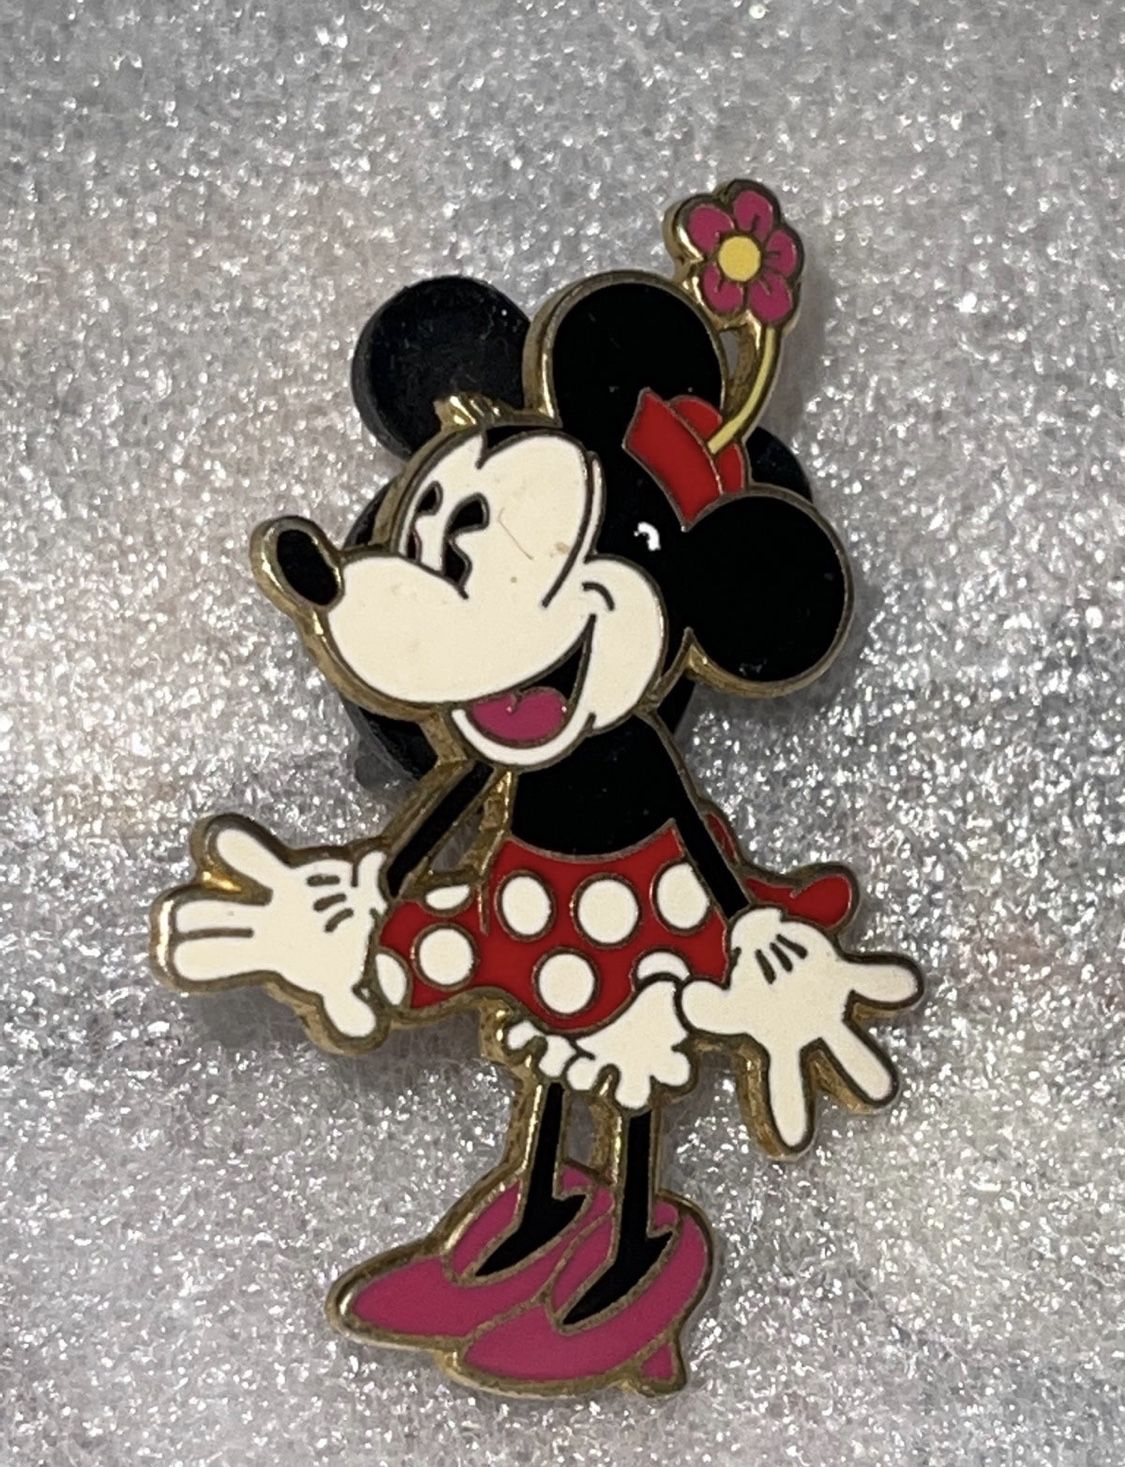 Disney Pin Minnie Mouse 2002!